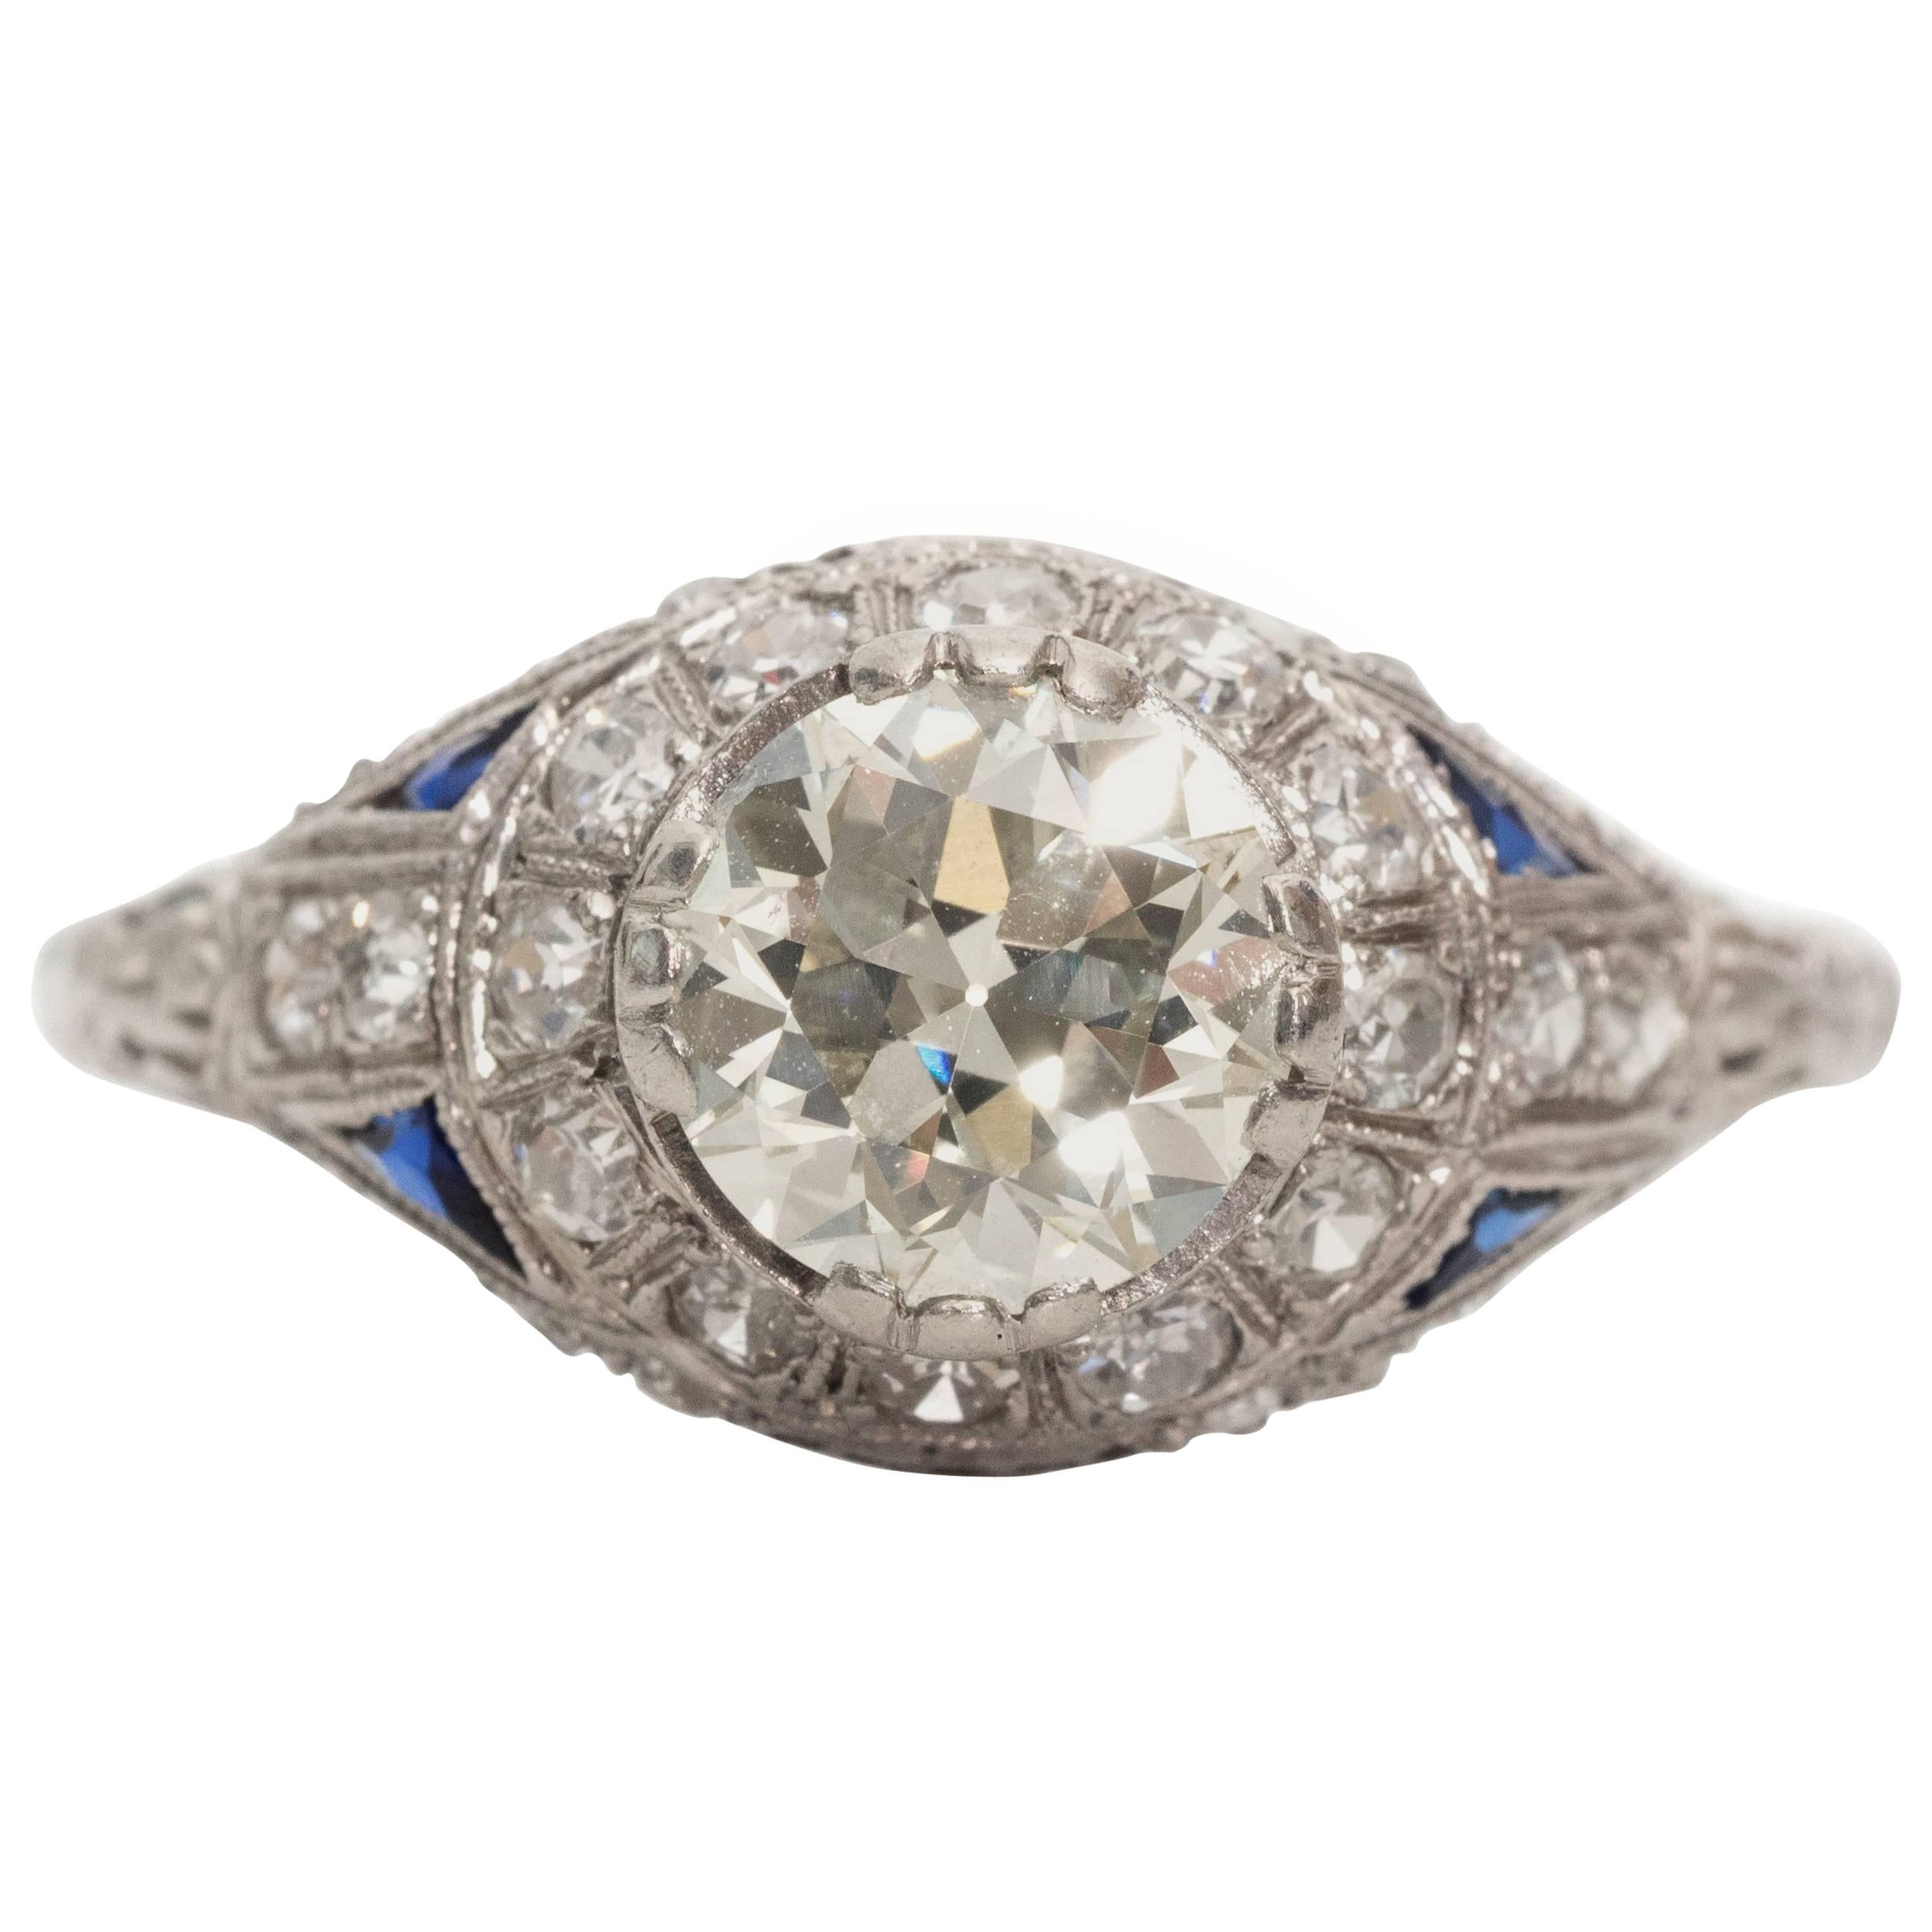 1900s Art Nouveau 1.35 Carat Diamond, Sapphire and Platinum Ring